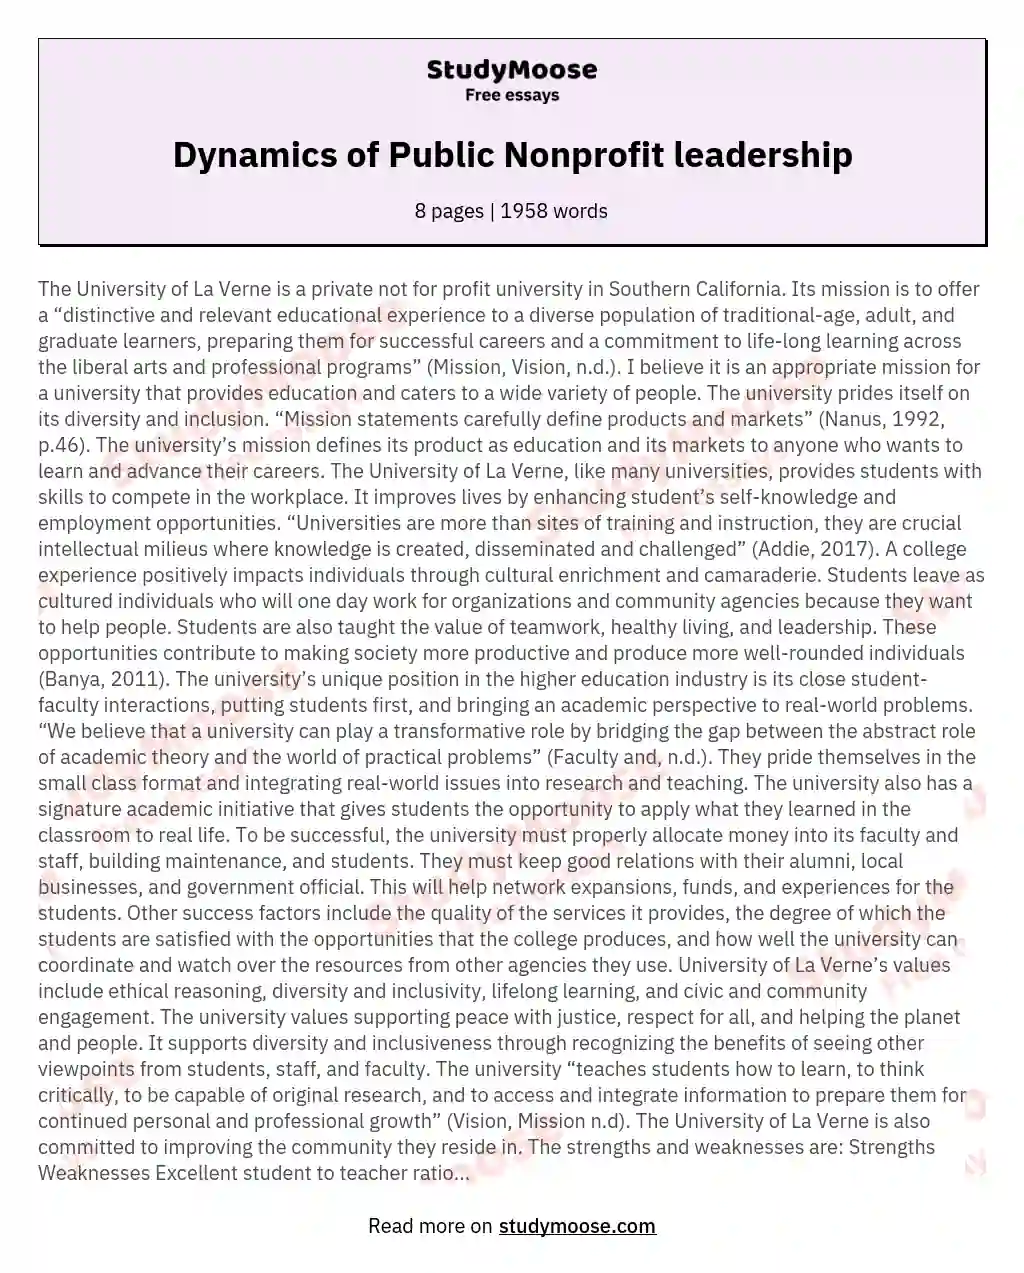 Dynamics of Public Nonprofit leadership essay